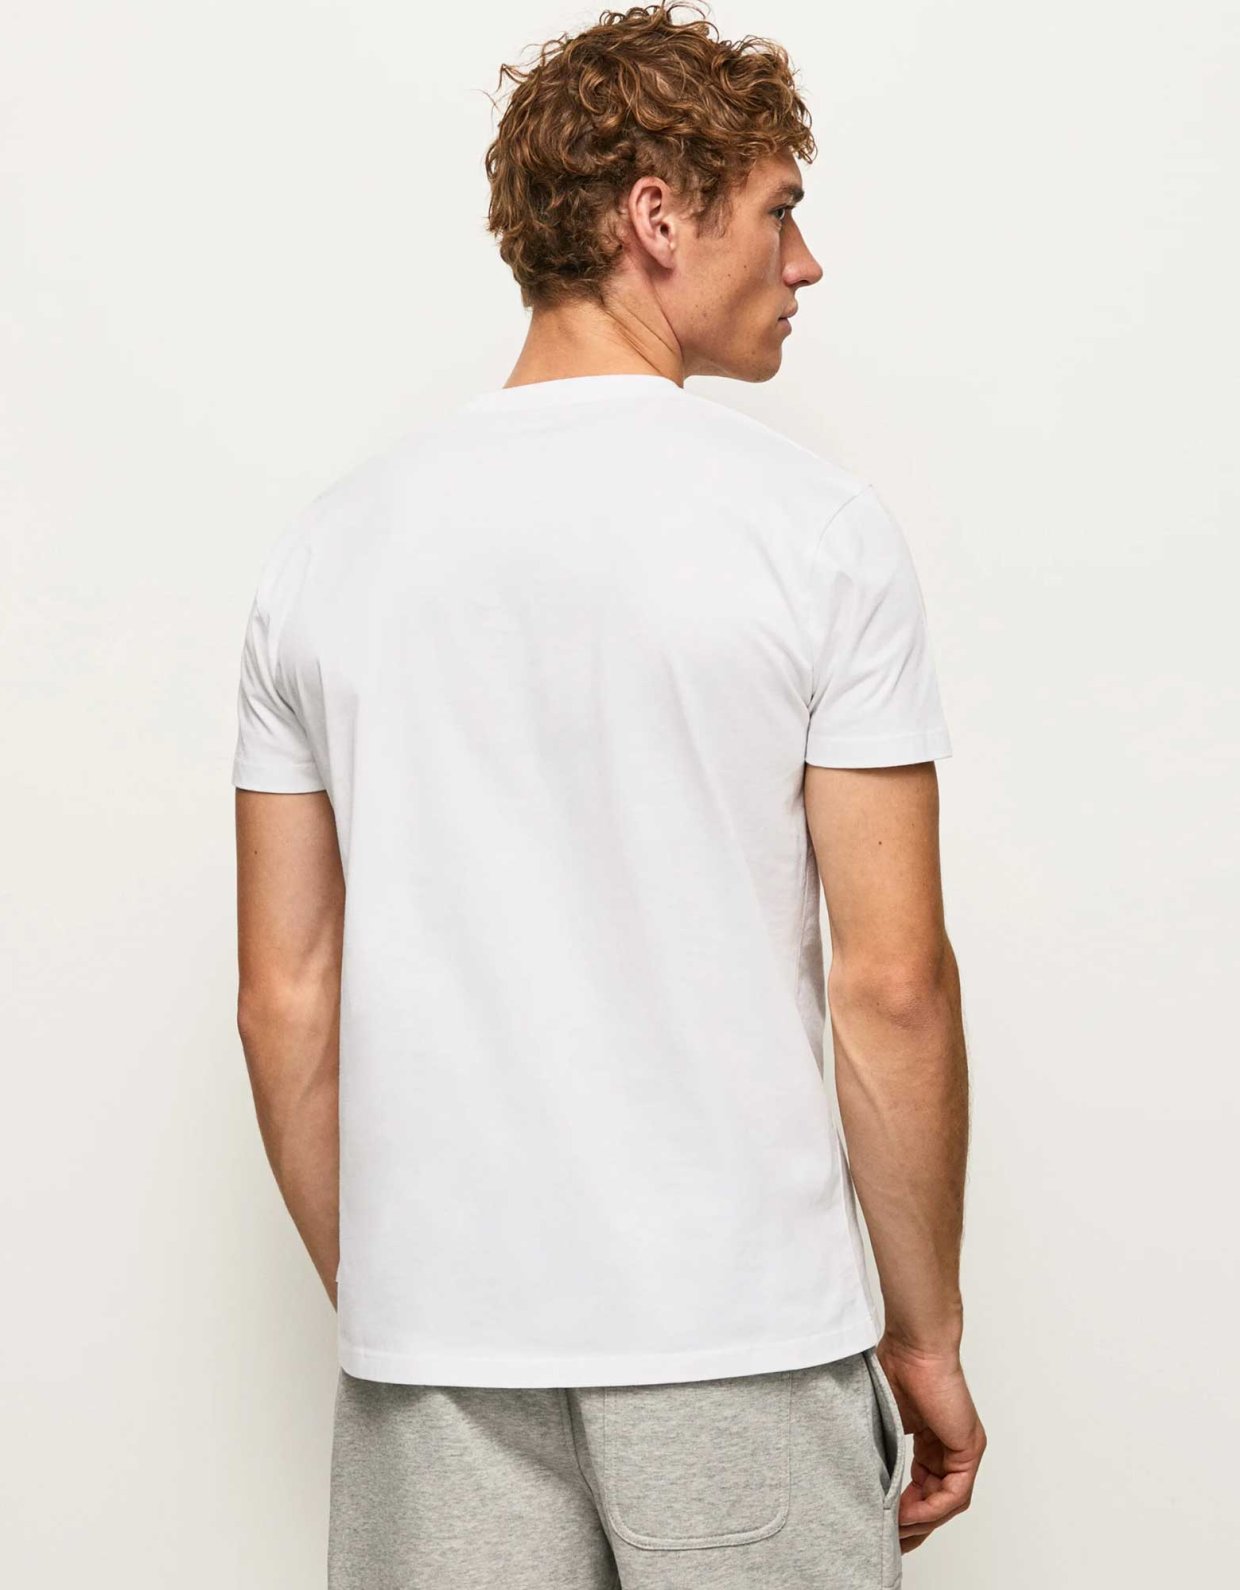 Pepe Jeans Ronson t-shirt white